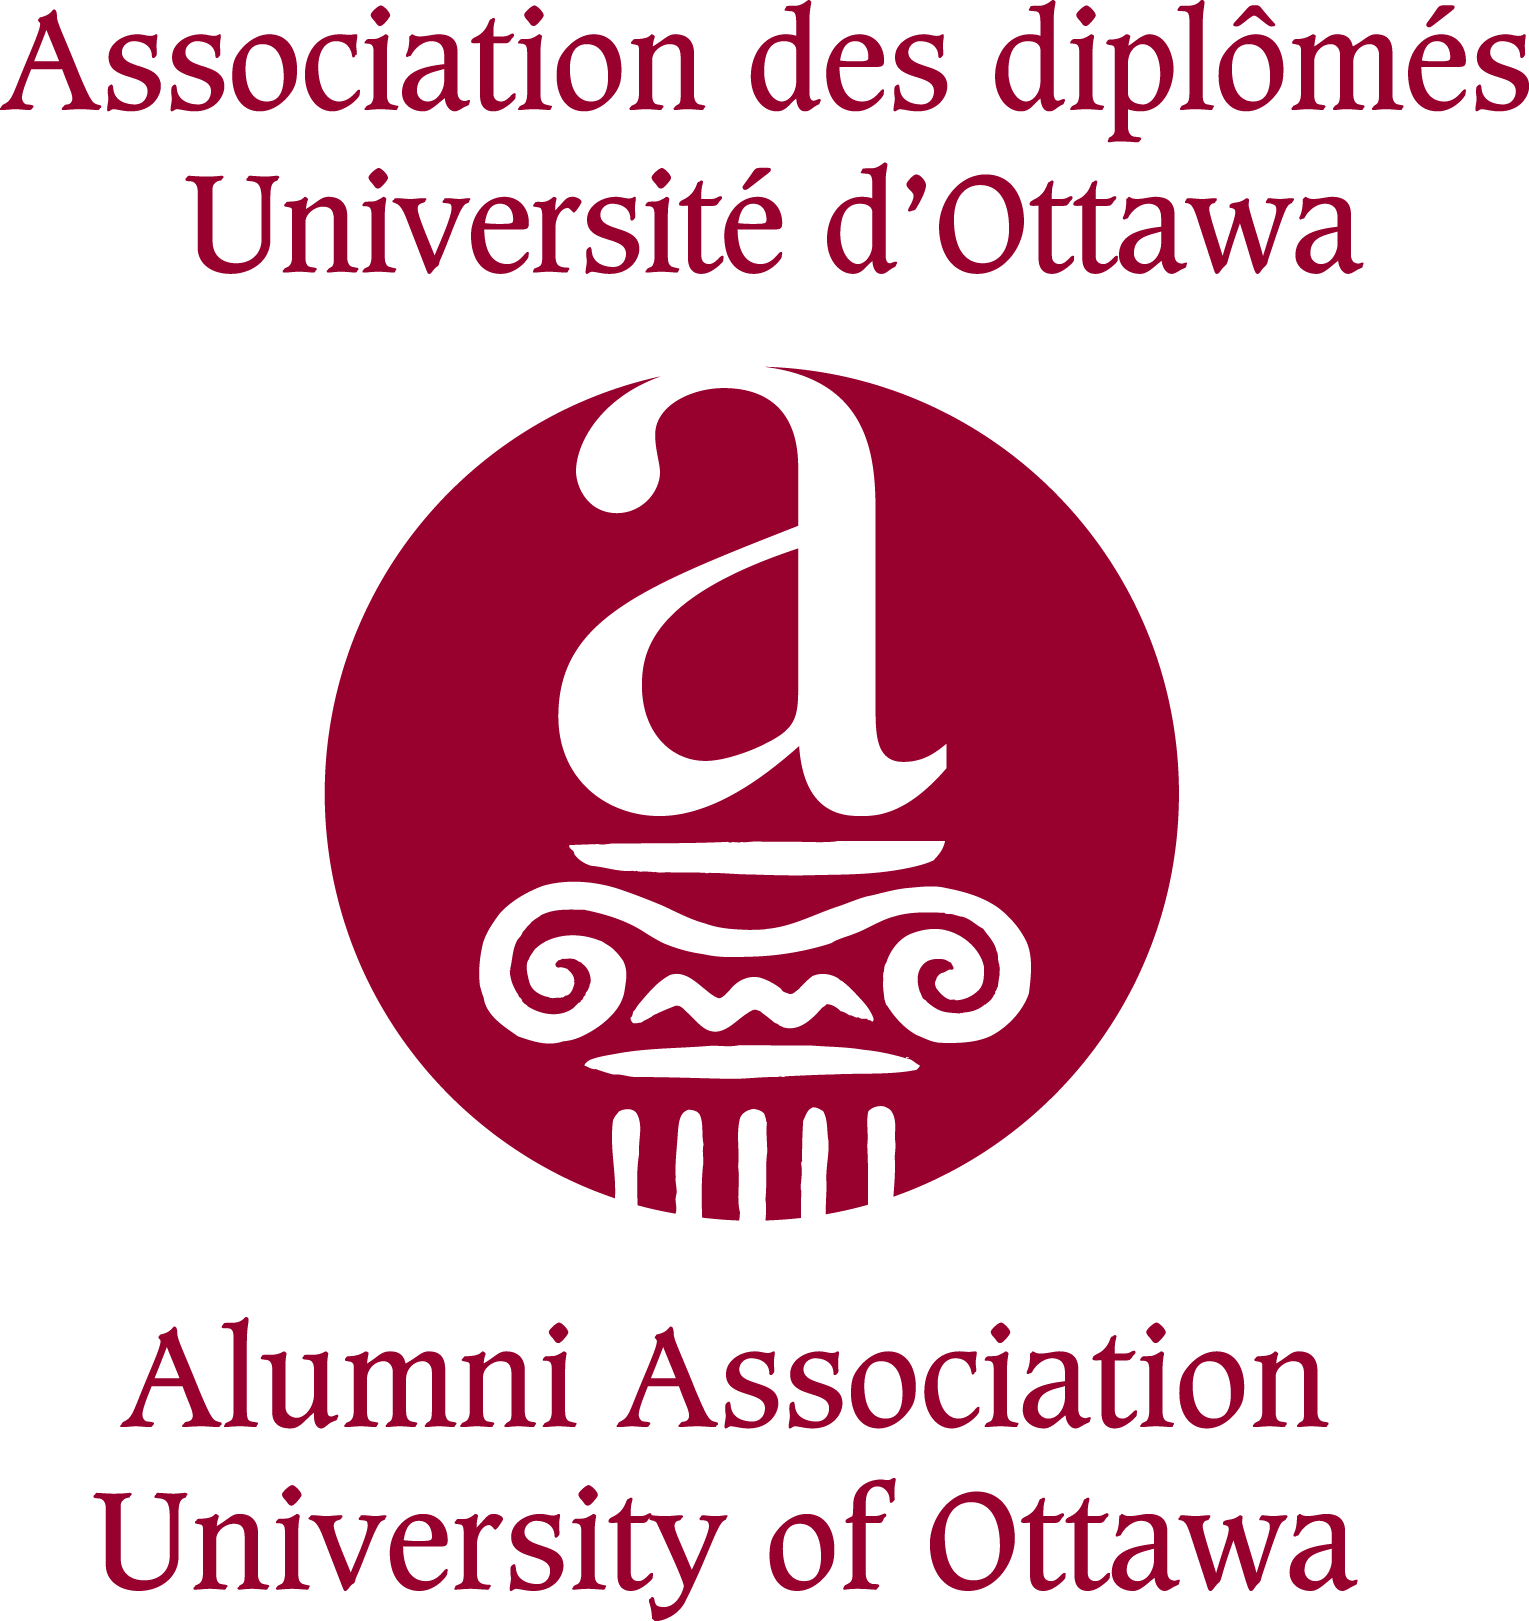 Logo: Association des diplômés de l'Université d'Ottawa, University of Ottawa Alumni Association